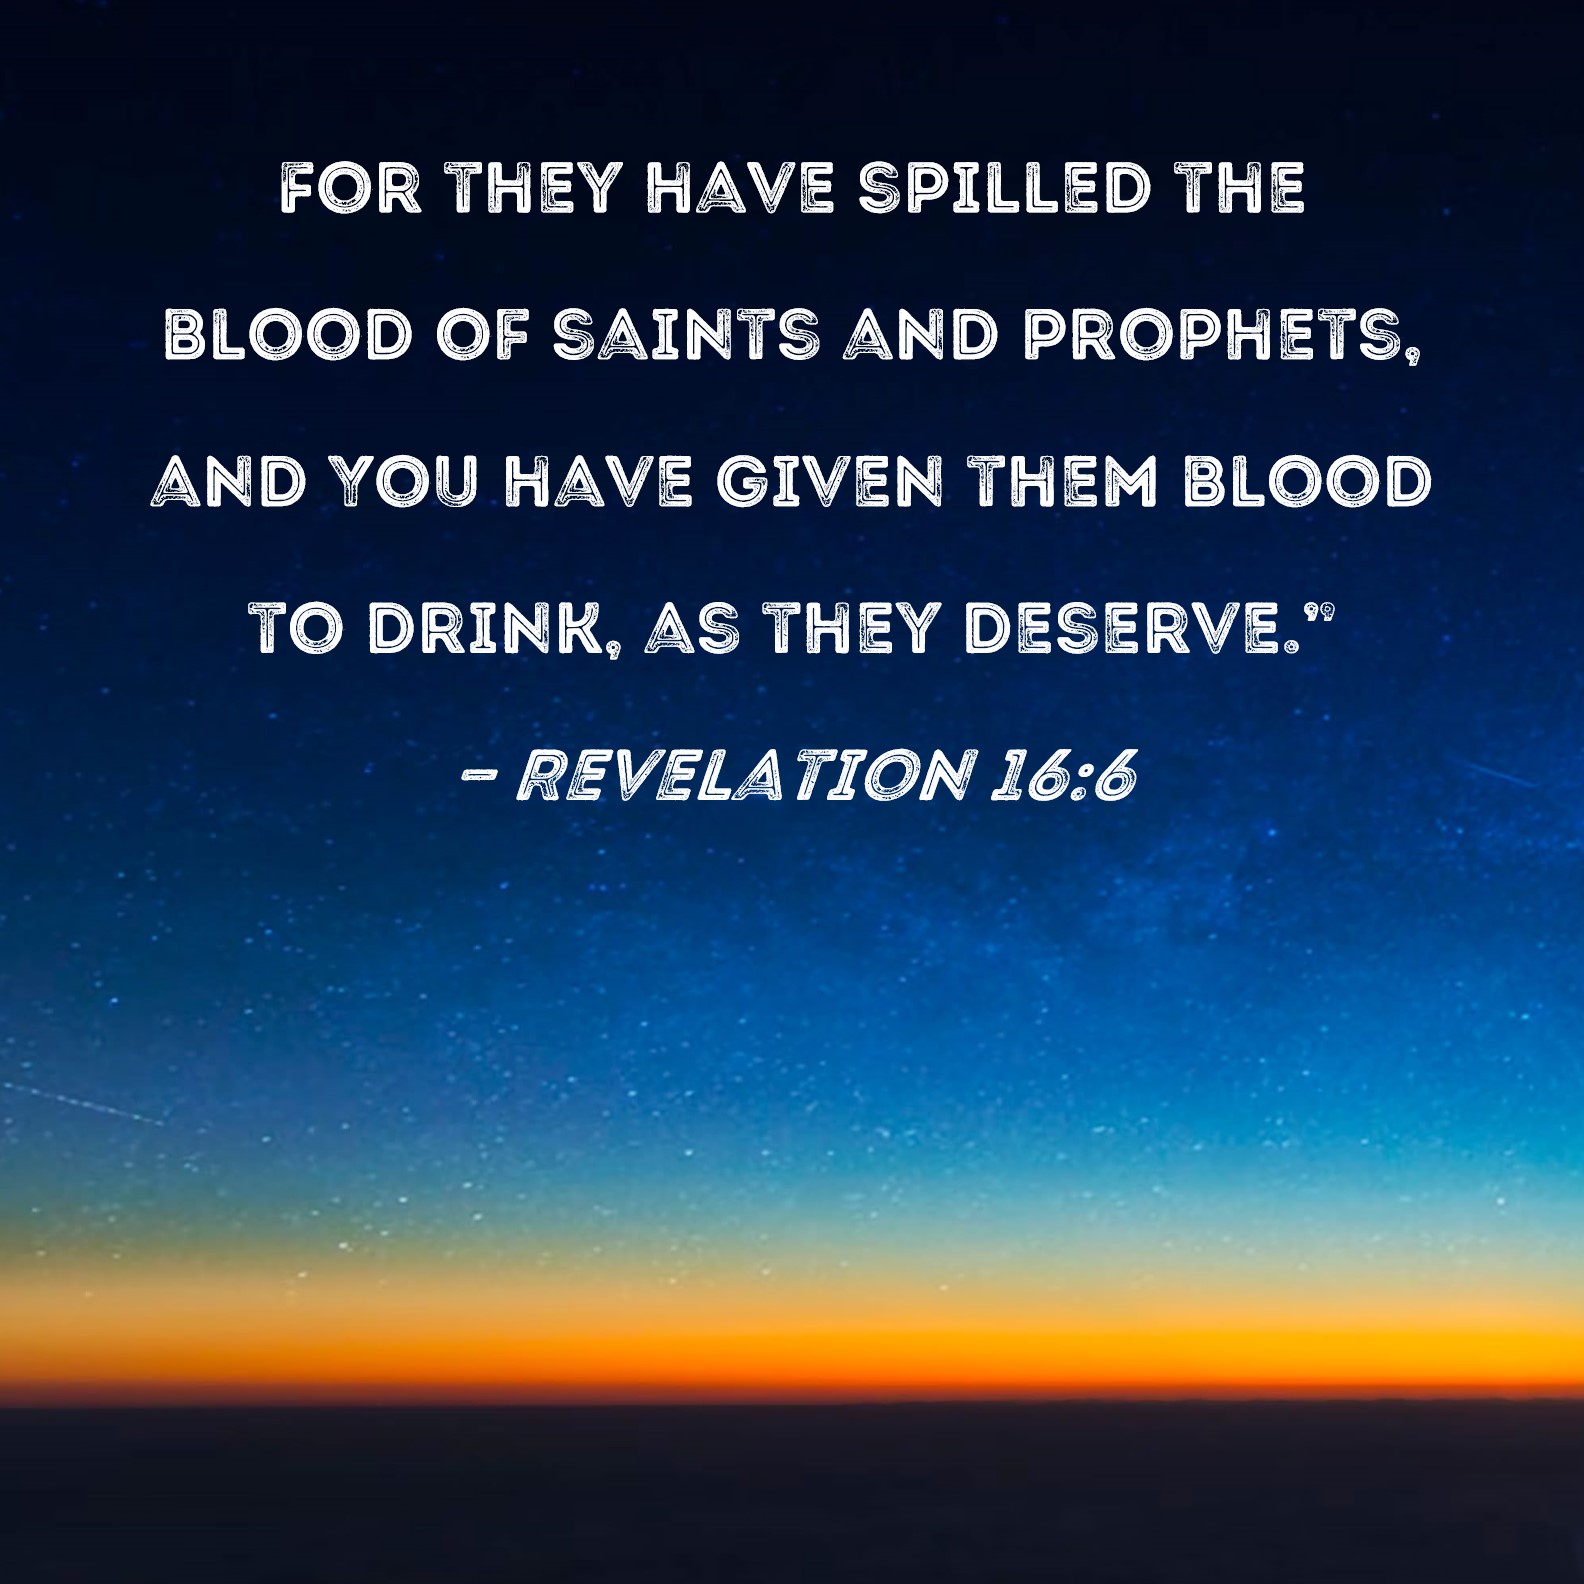 Blood Of The Saints